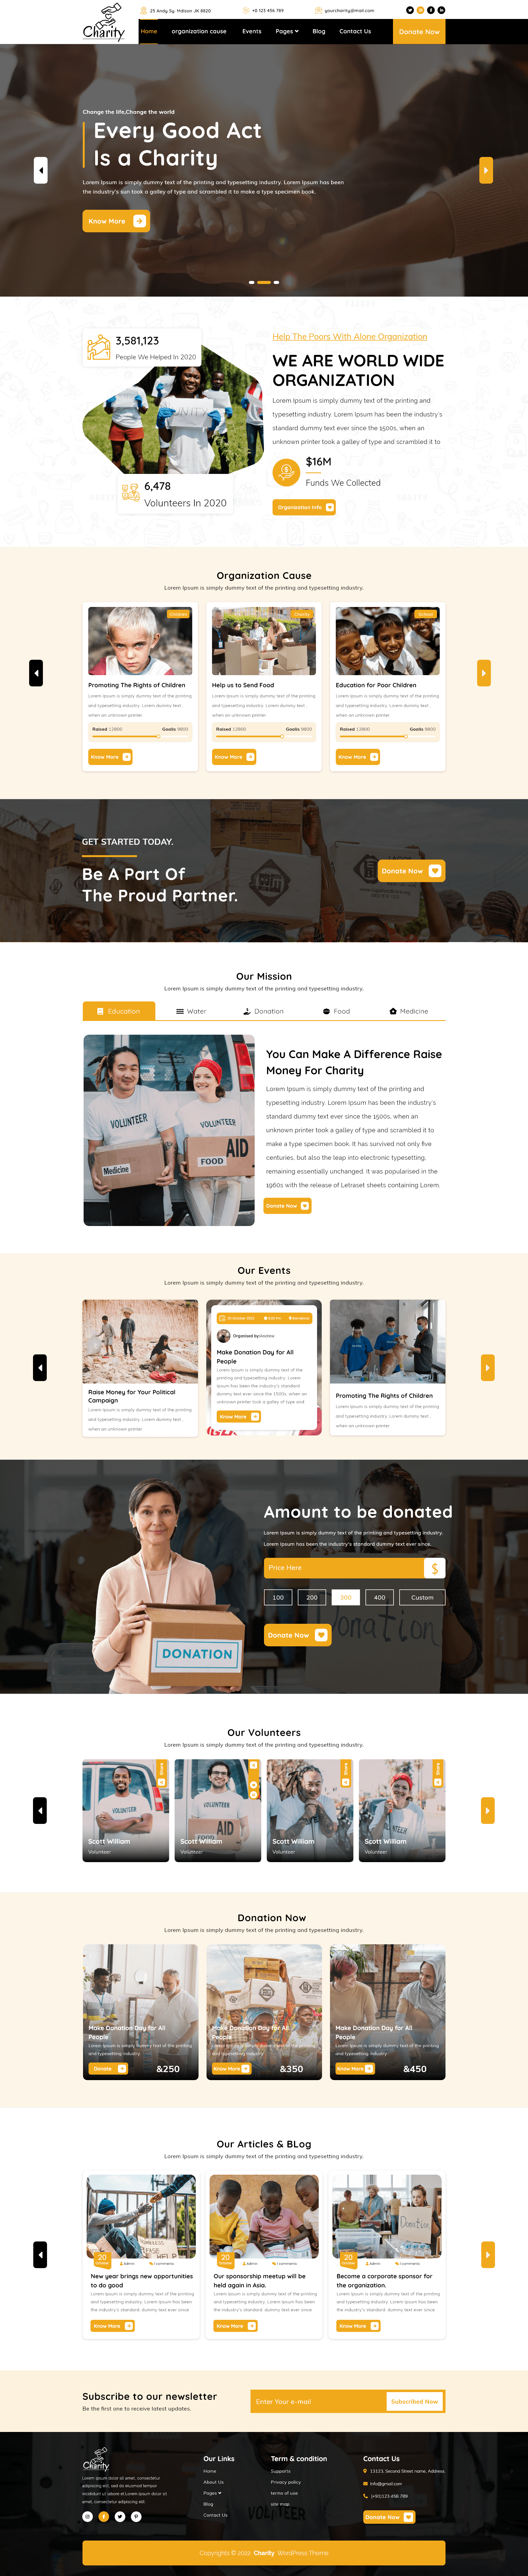 Charity Wordpress theme images